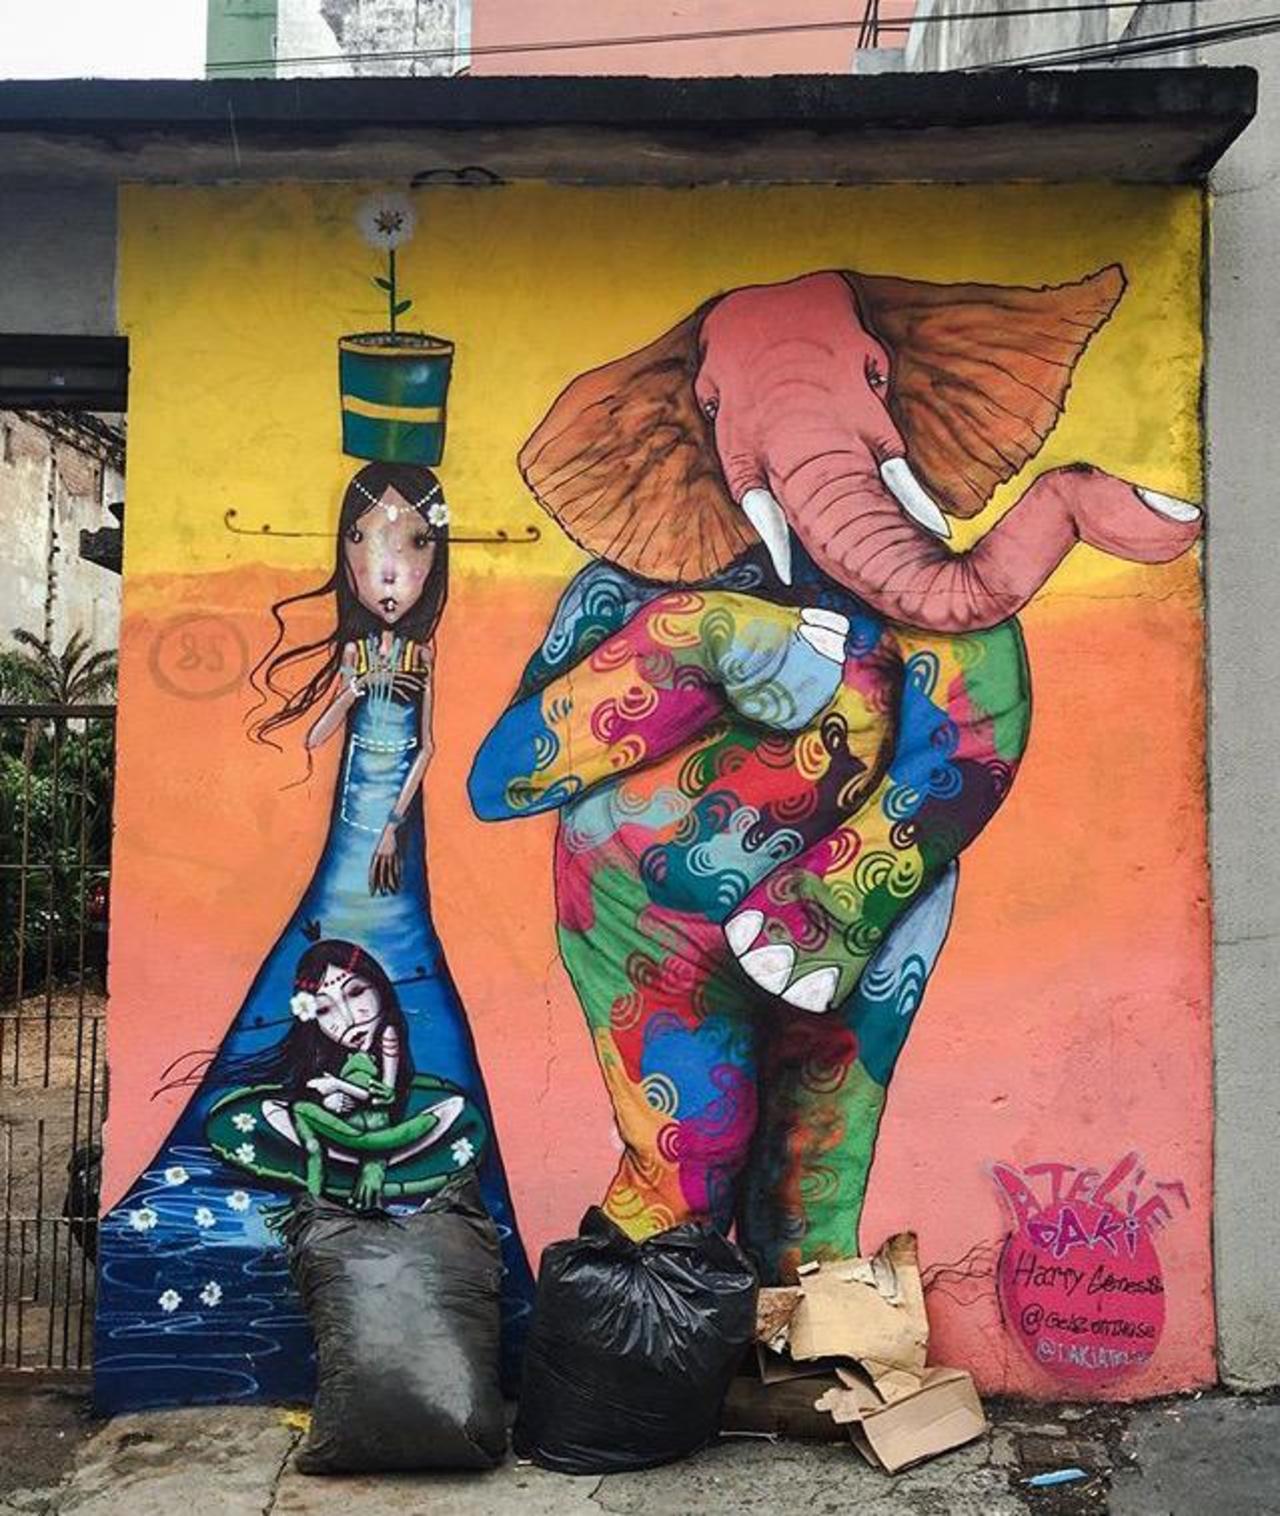 Street Art by Harry Geneis & Gelson in São Paulo #art #mural #graffiti #streetart http://t.co/SlLbhuMZfD … … …… … http://twitter.com/charlesjackso14/status/648021472900960256